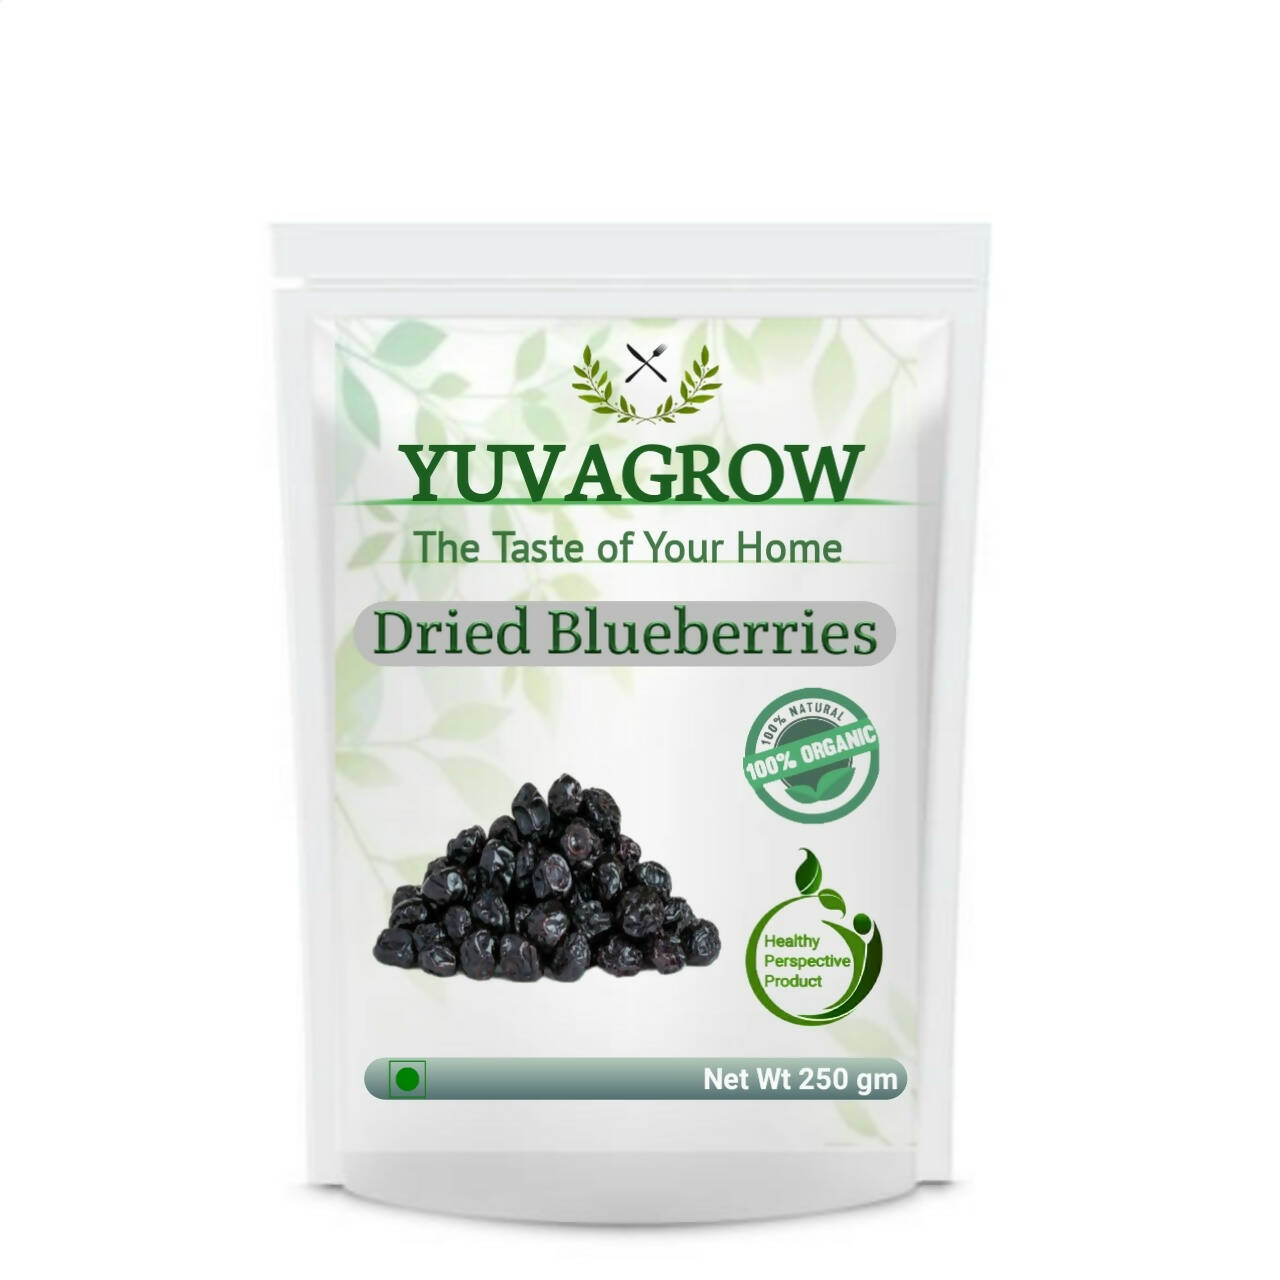 Yuvagrow Dried Blueberries - buy in USA, Australia, Canada